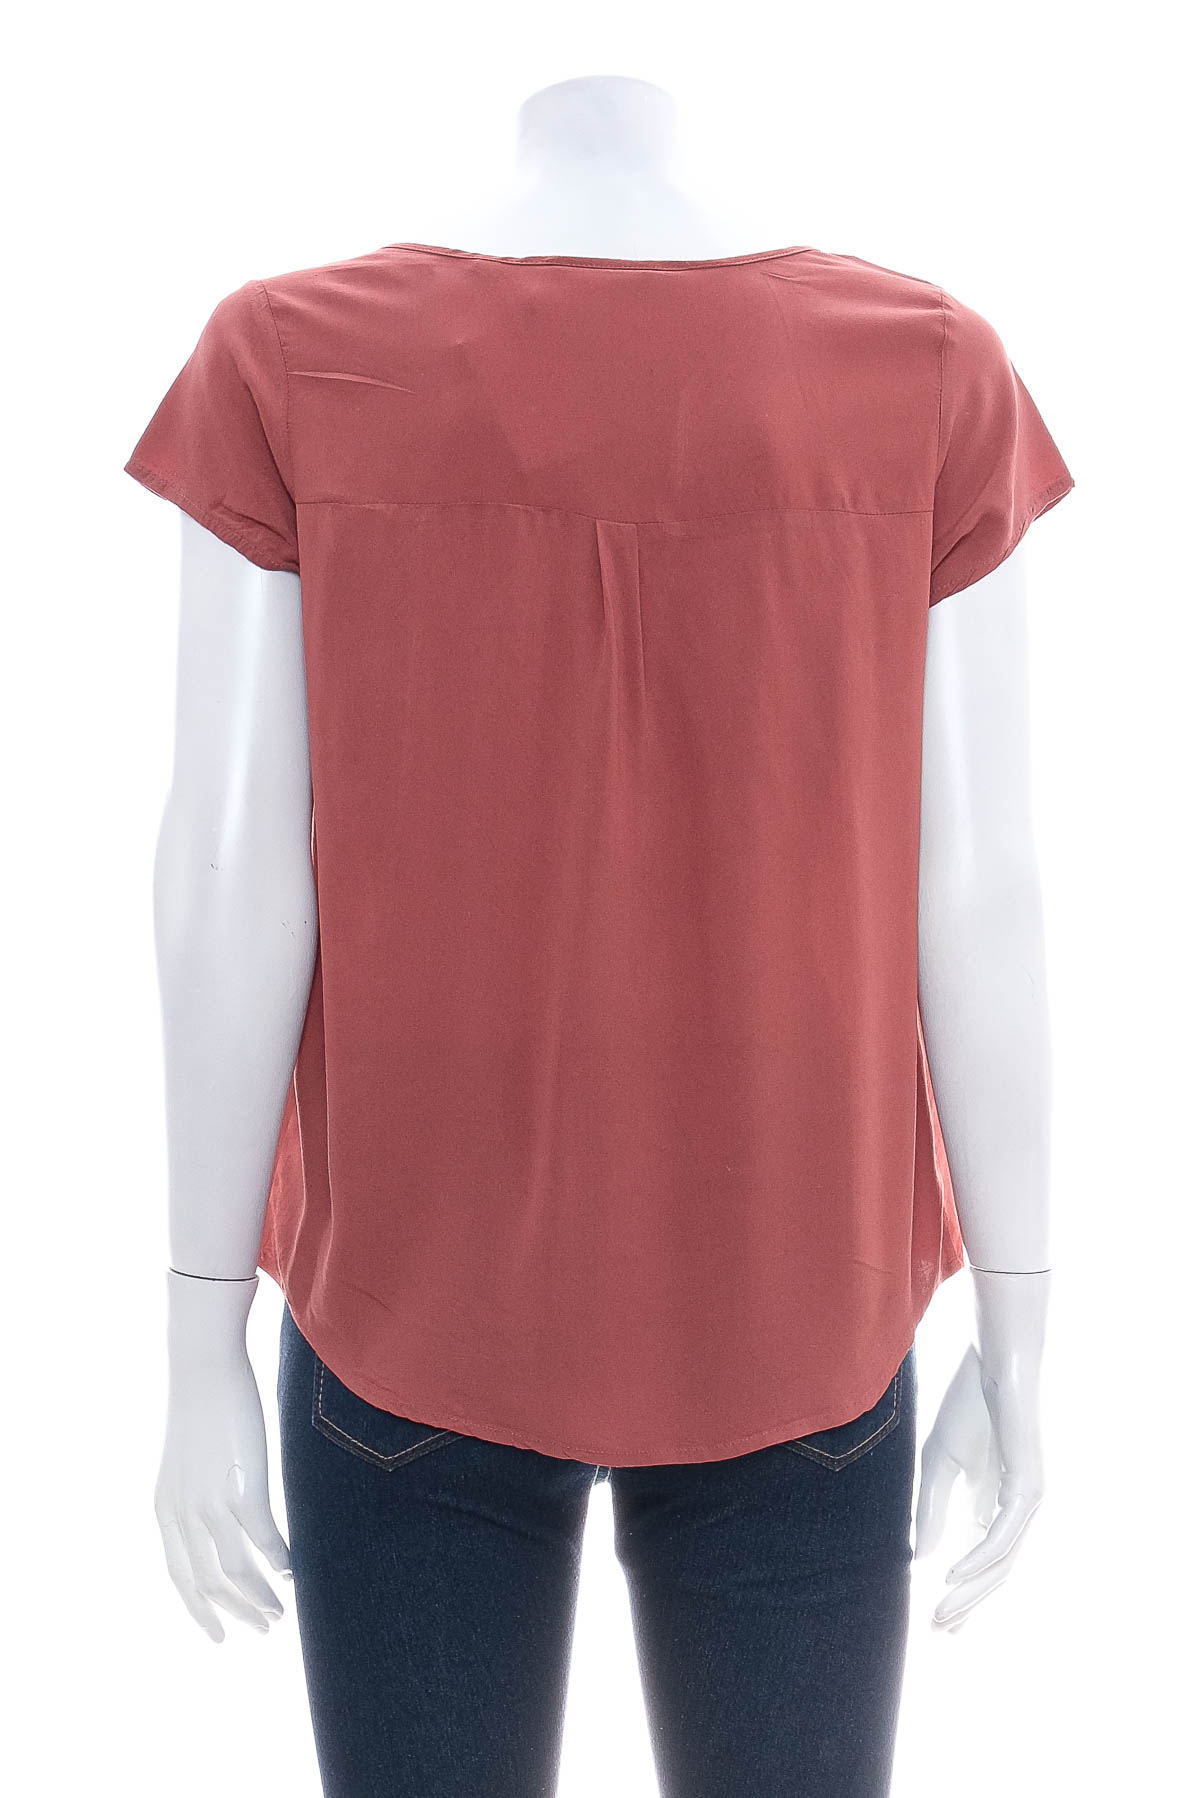 Women's shirt - Greystone - 1